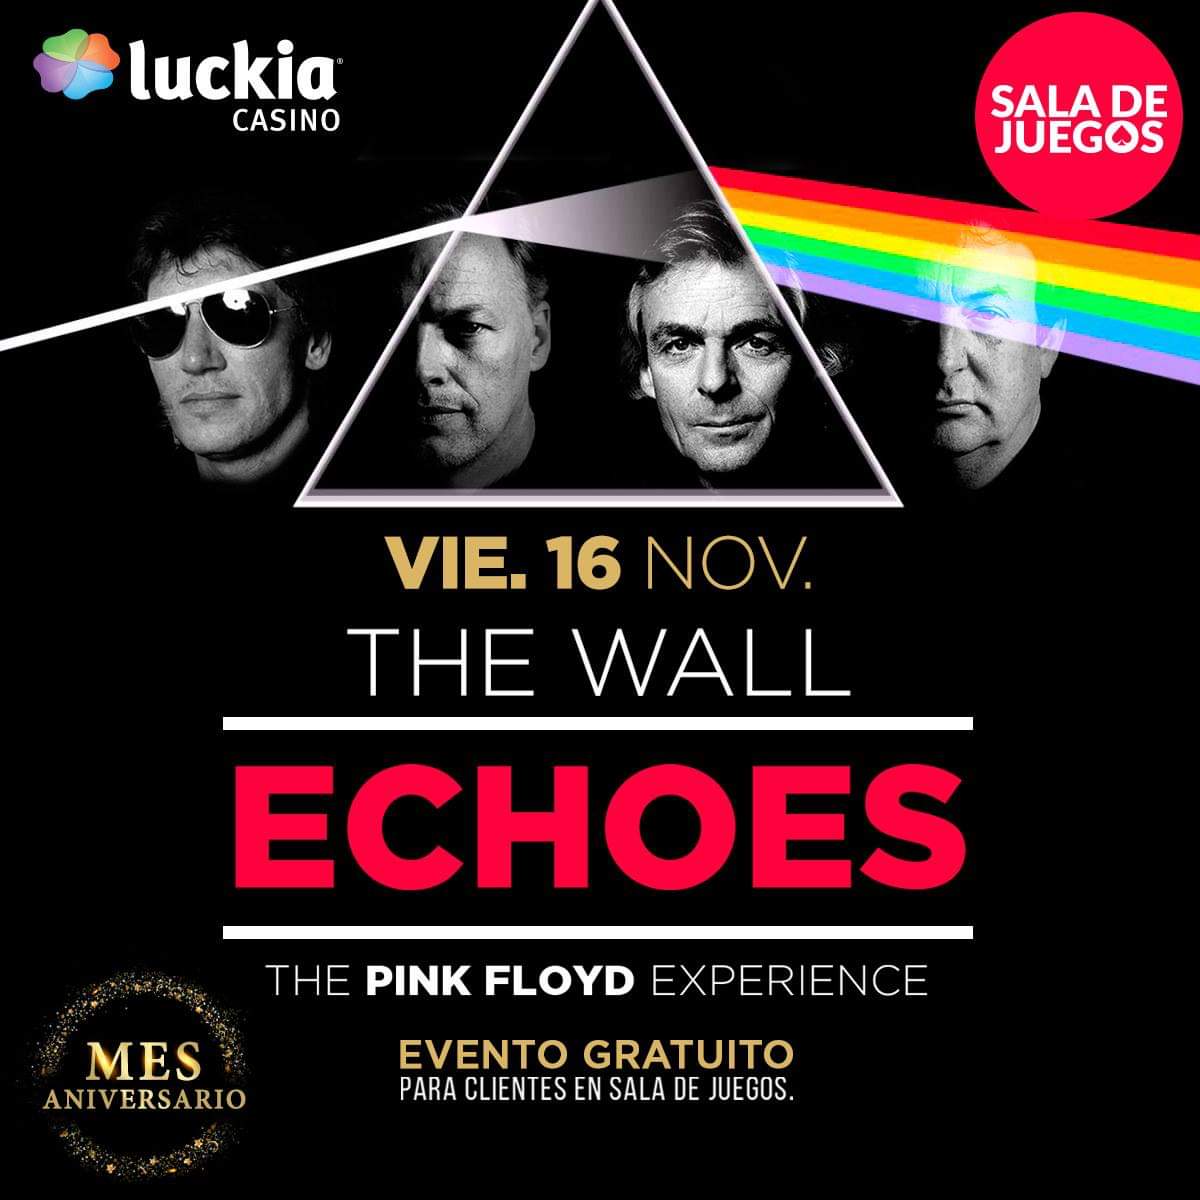 Arica al día Mañana se Presenta Banda Tributo a Pink Floyd en Luckia